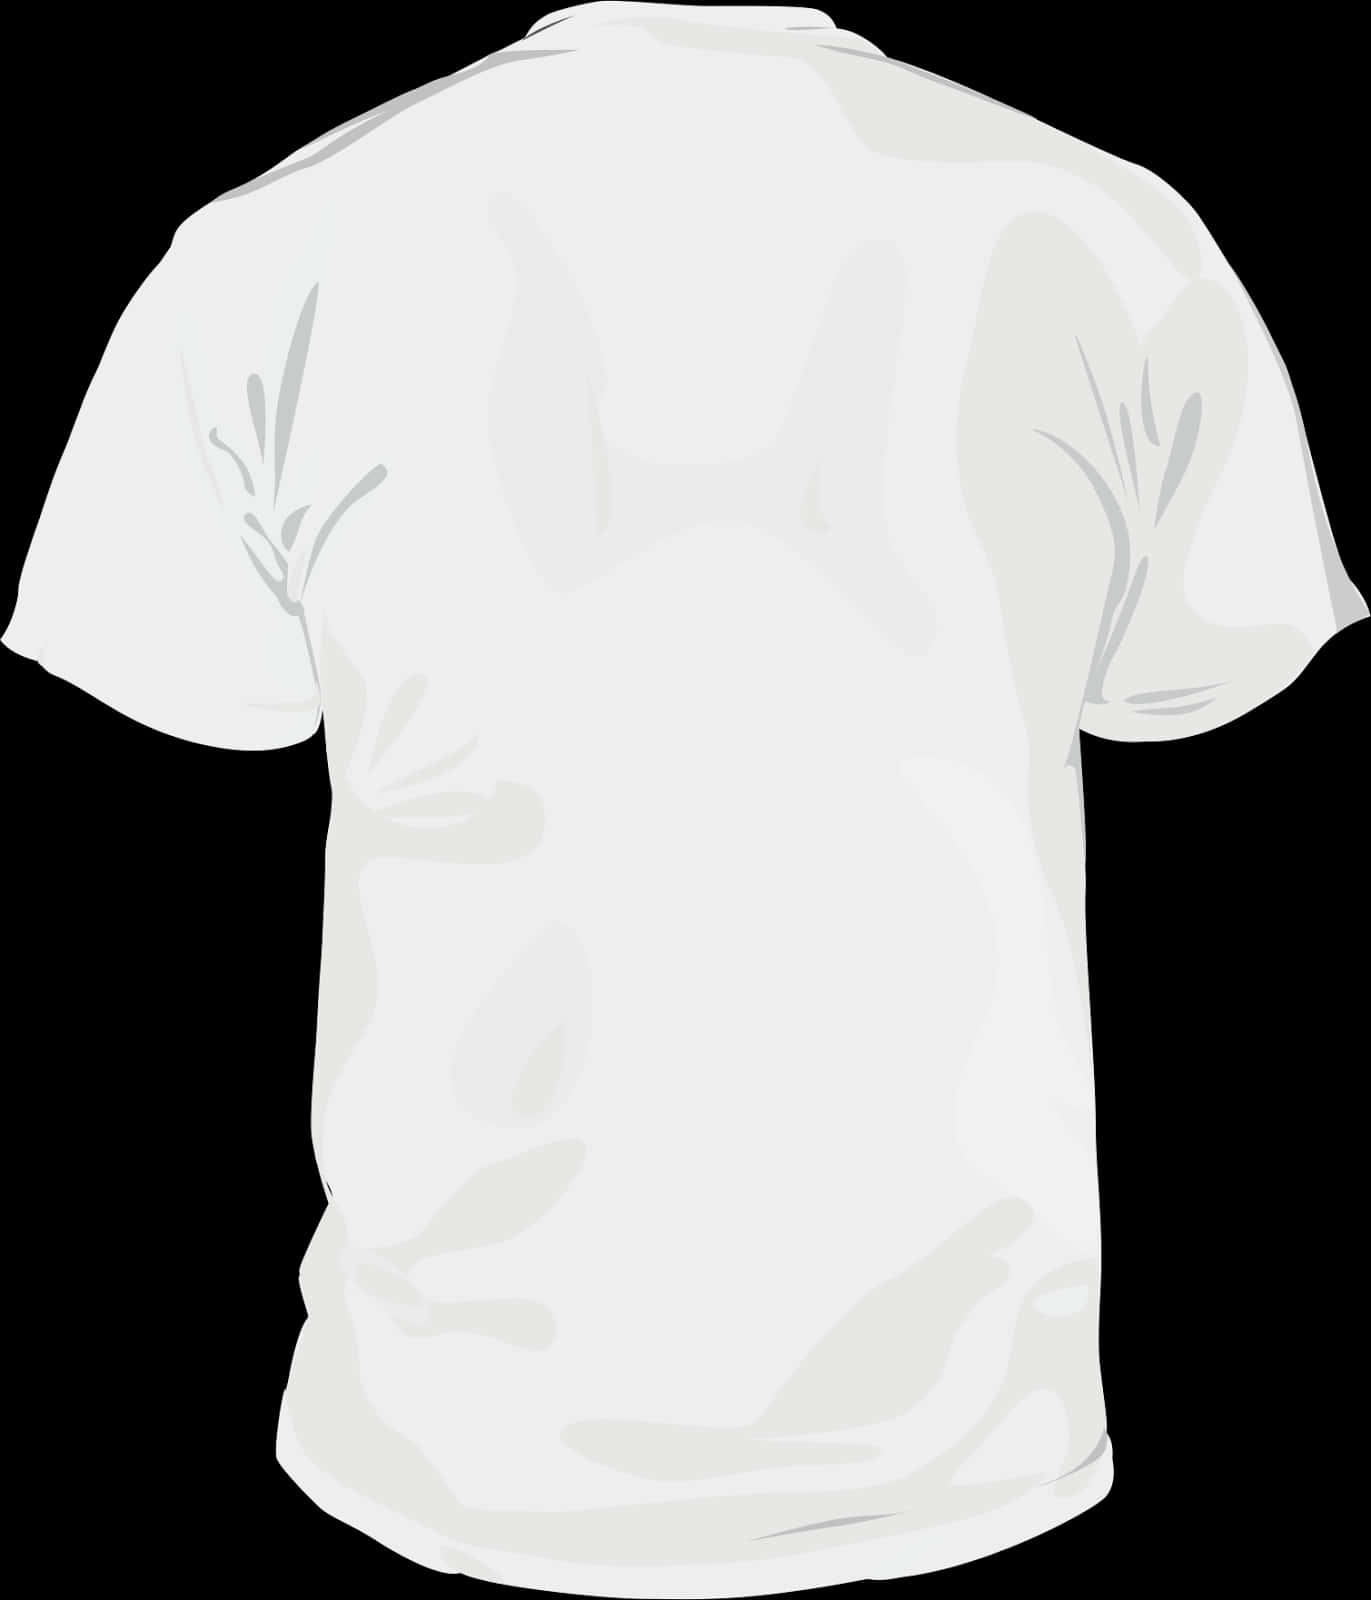 Plain White Shirt Back View PNG image